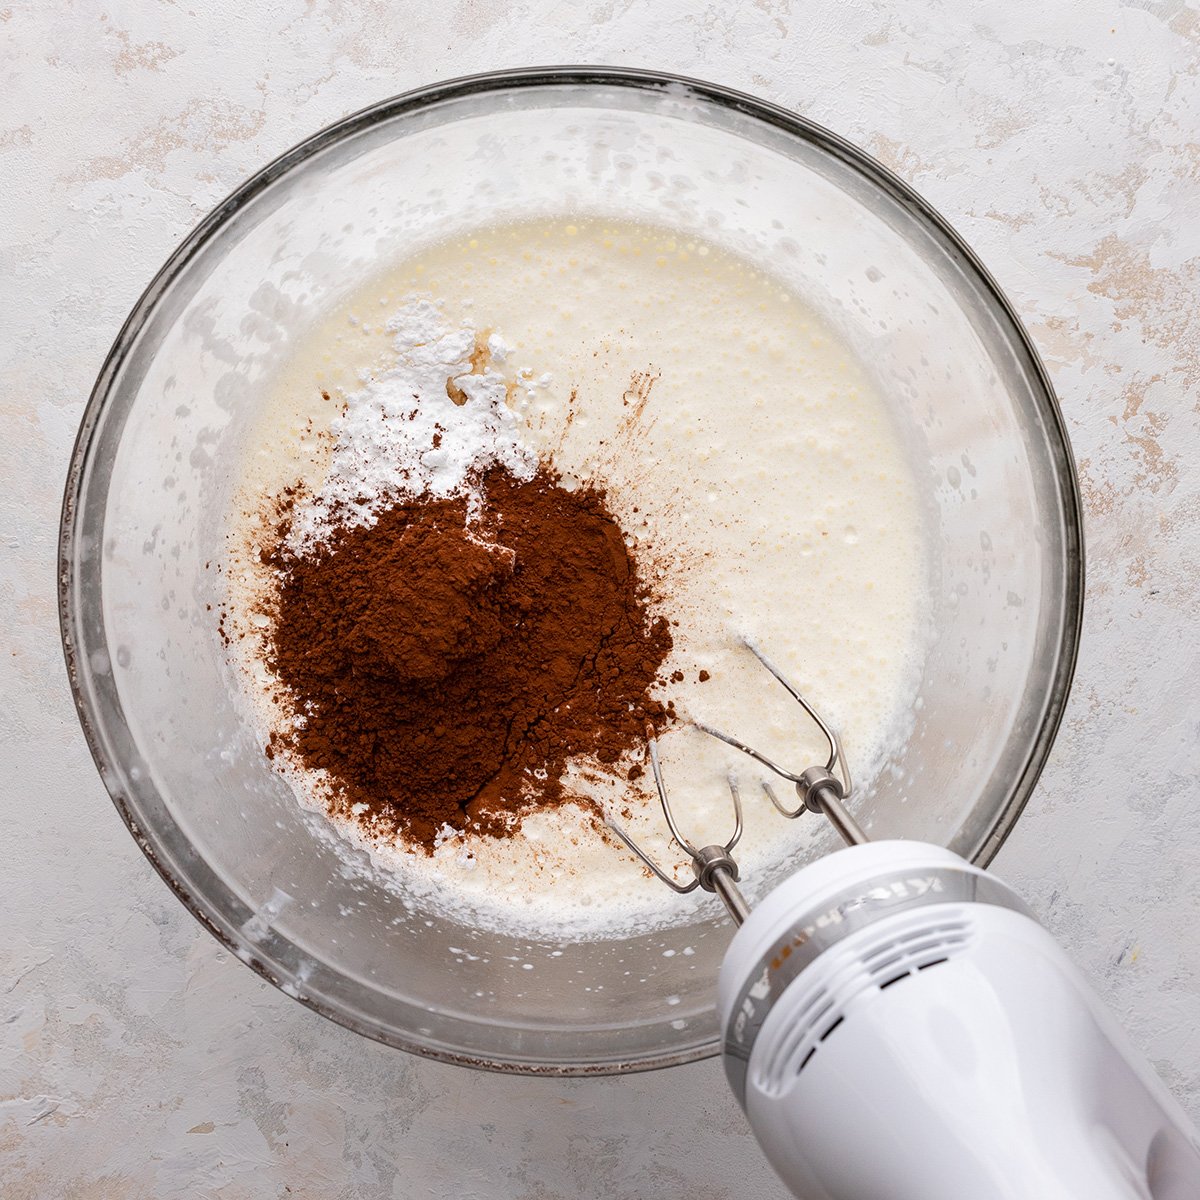 adding cocoa powder, powdered sugar and vanilla to the whipped cream to make Chocolate Whipped Cream